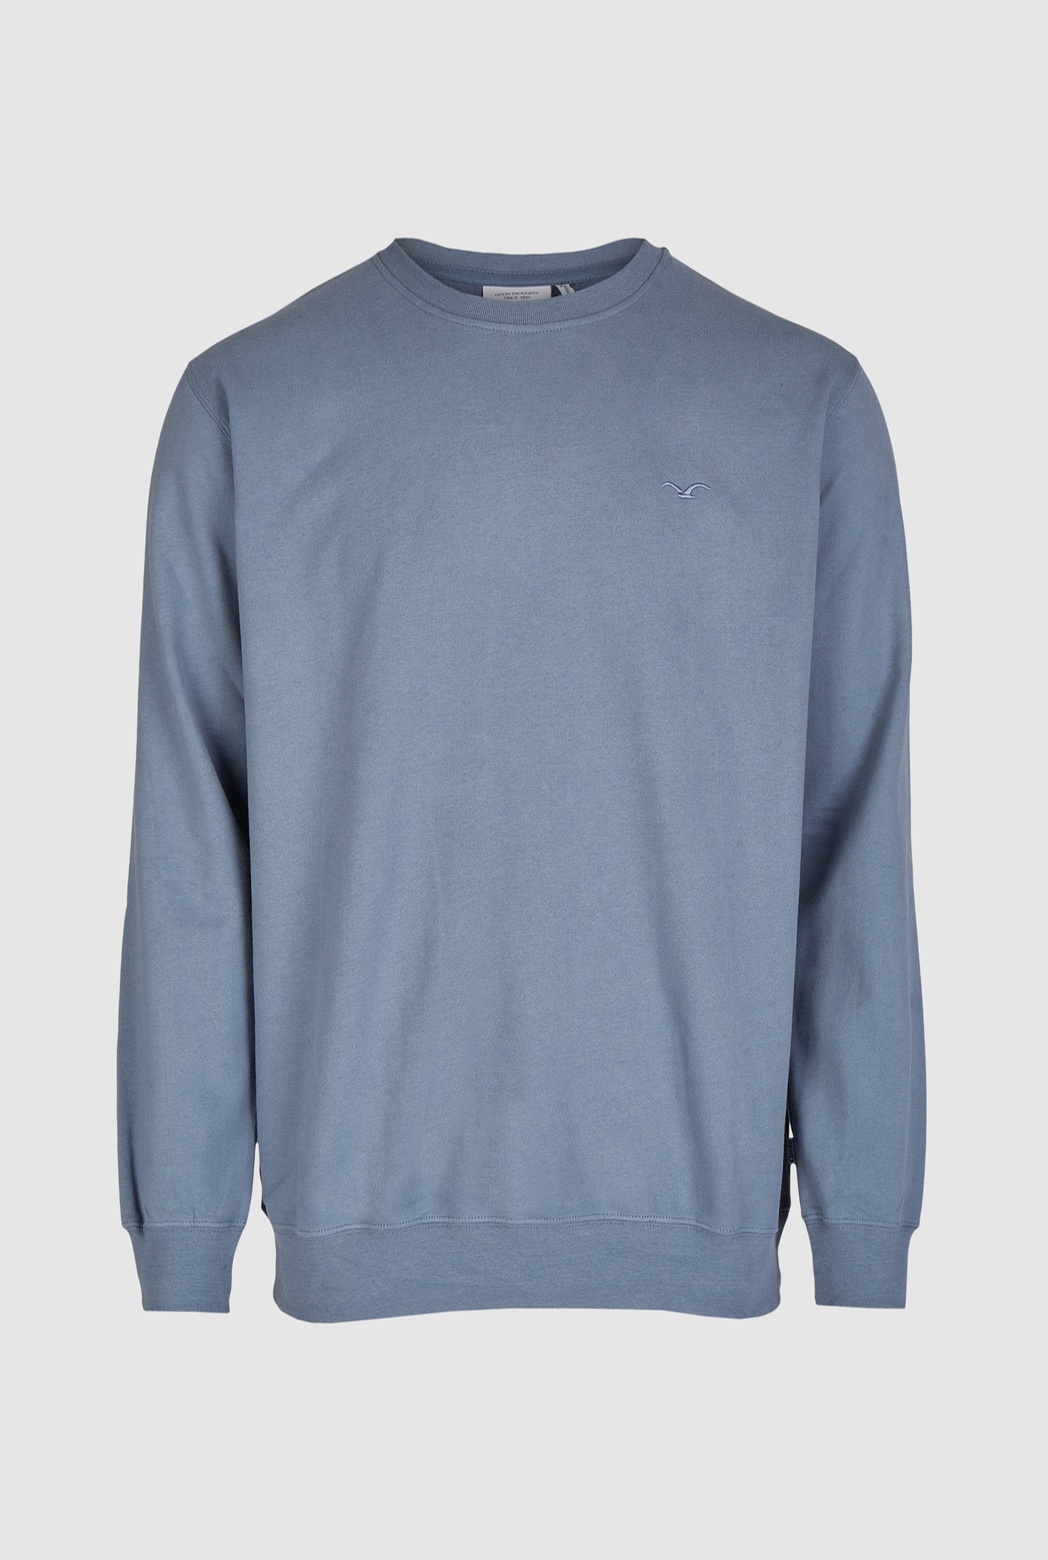 Cleptomanicx veganes vegane CREWNECK blau - Sweatshirt LIGULL Le Accessoires Vegan in und | Mode Shop